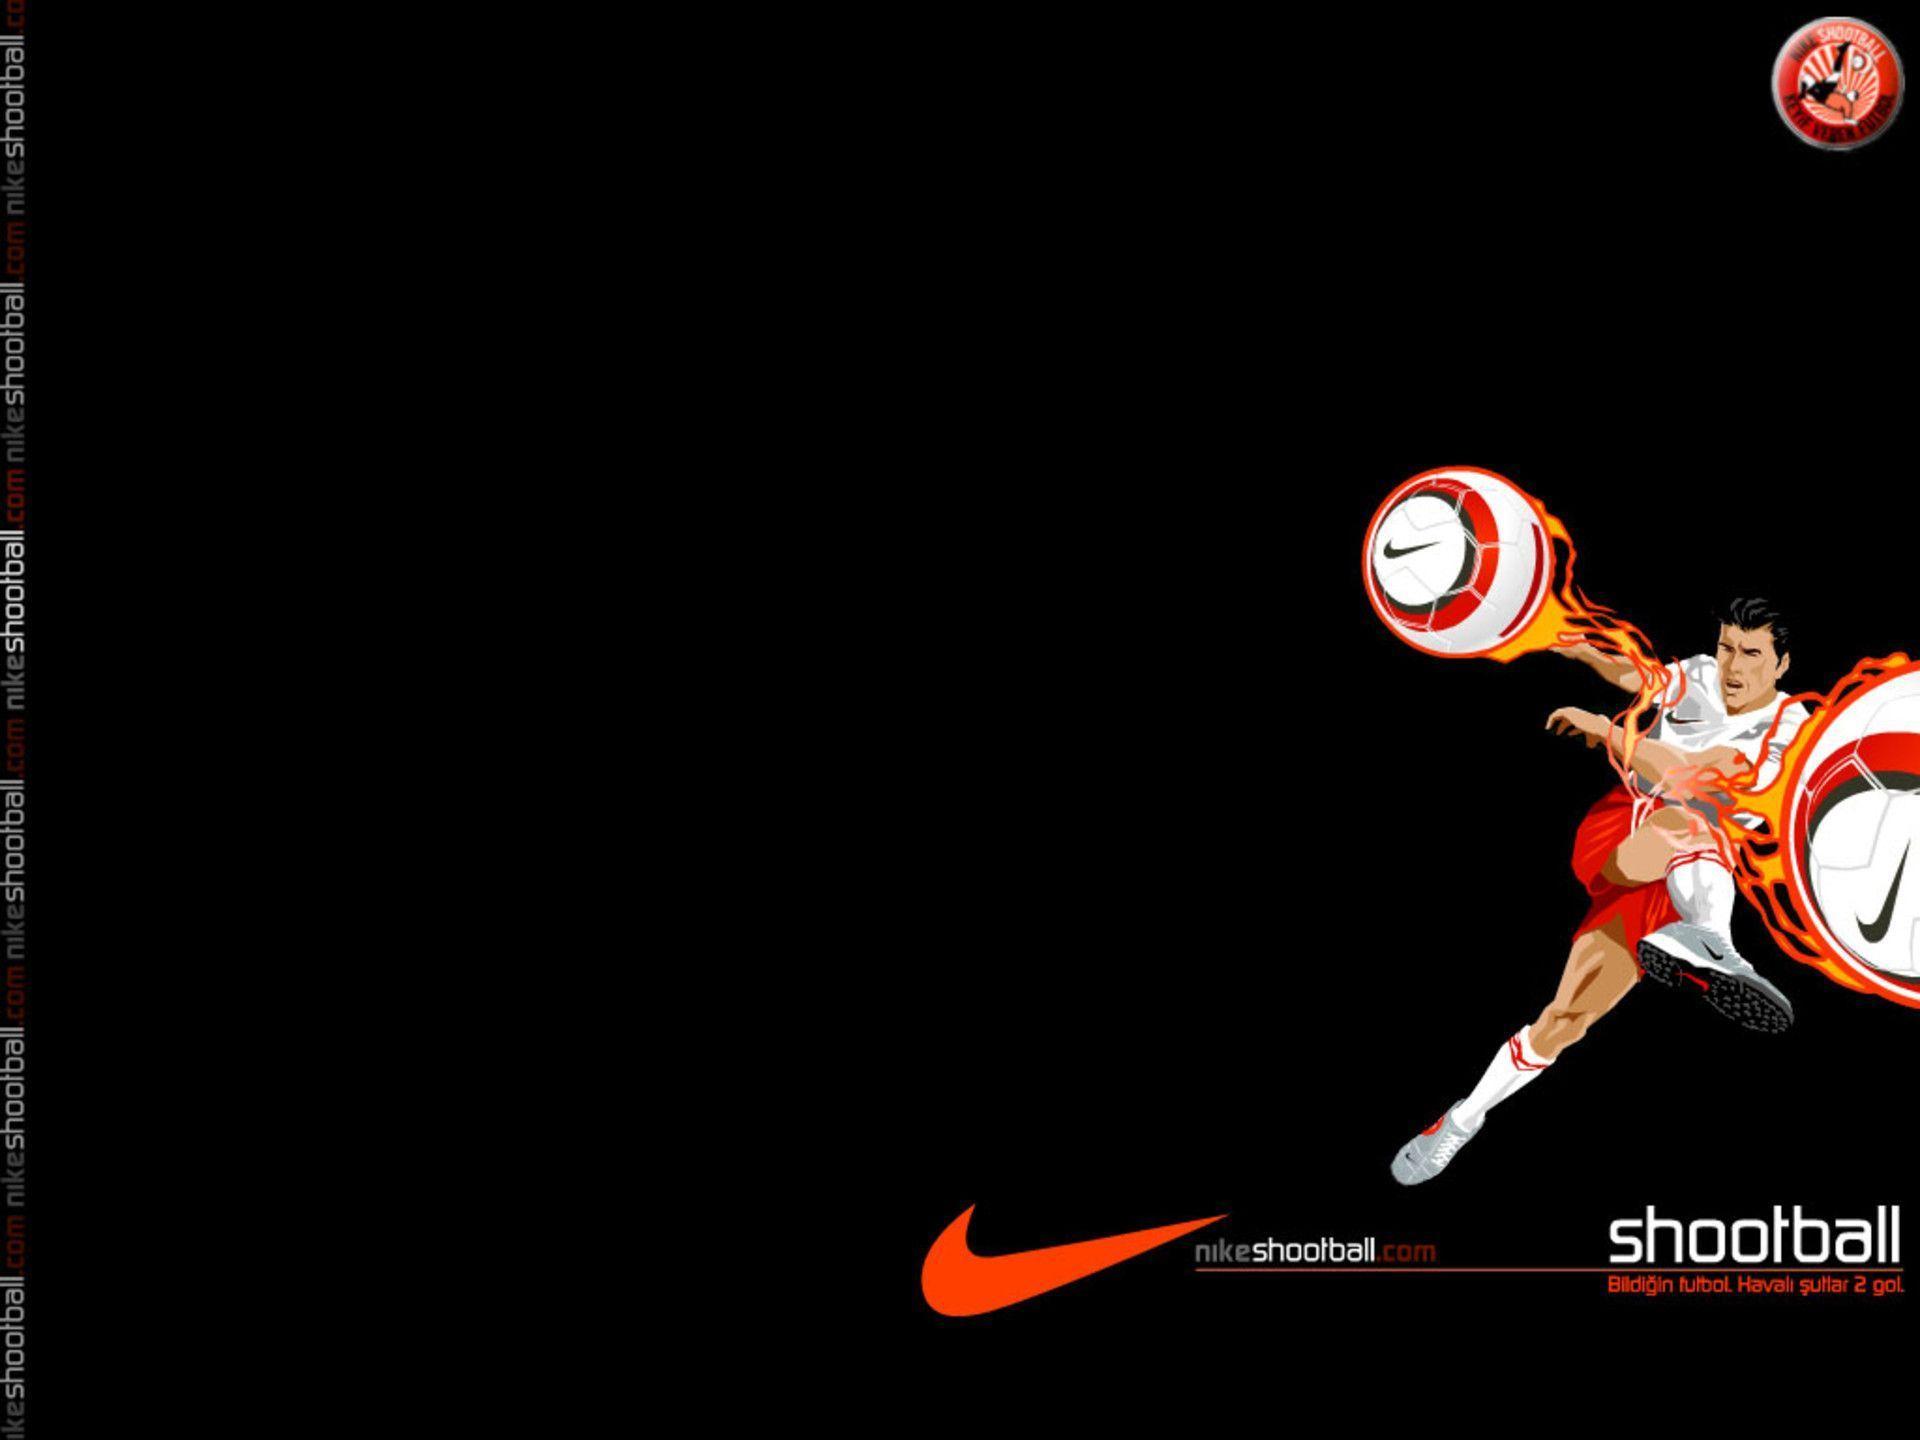 Nike Football Image Wallpaper HD